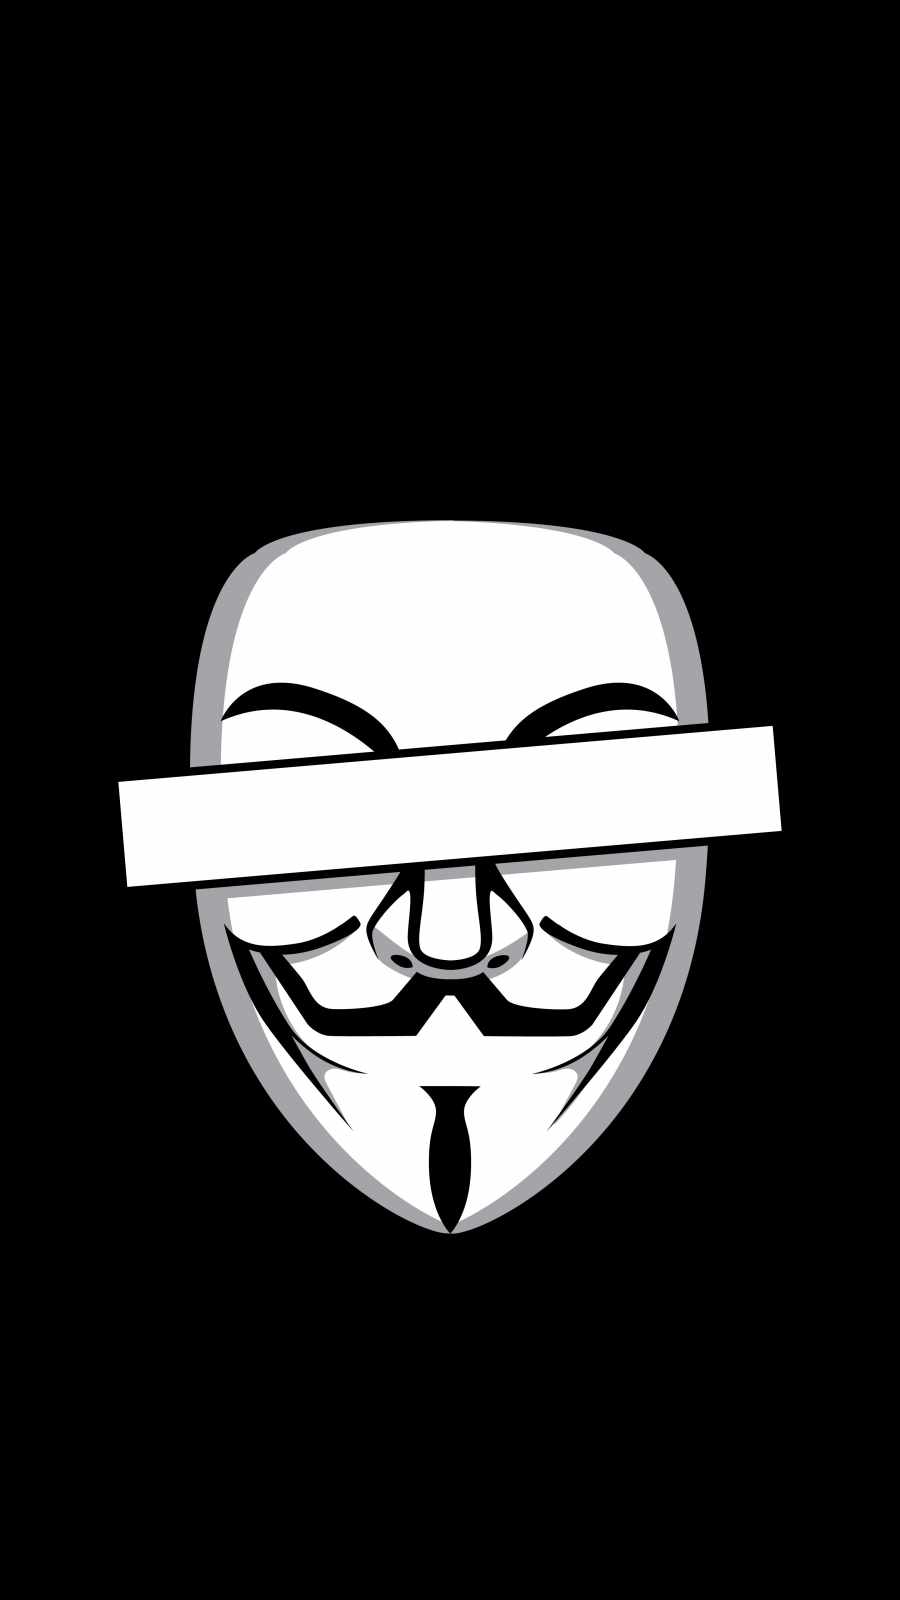 Hacker Mask iPhone Wallpaper